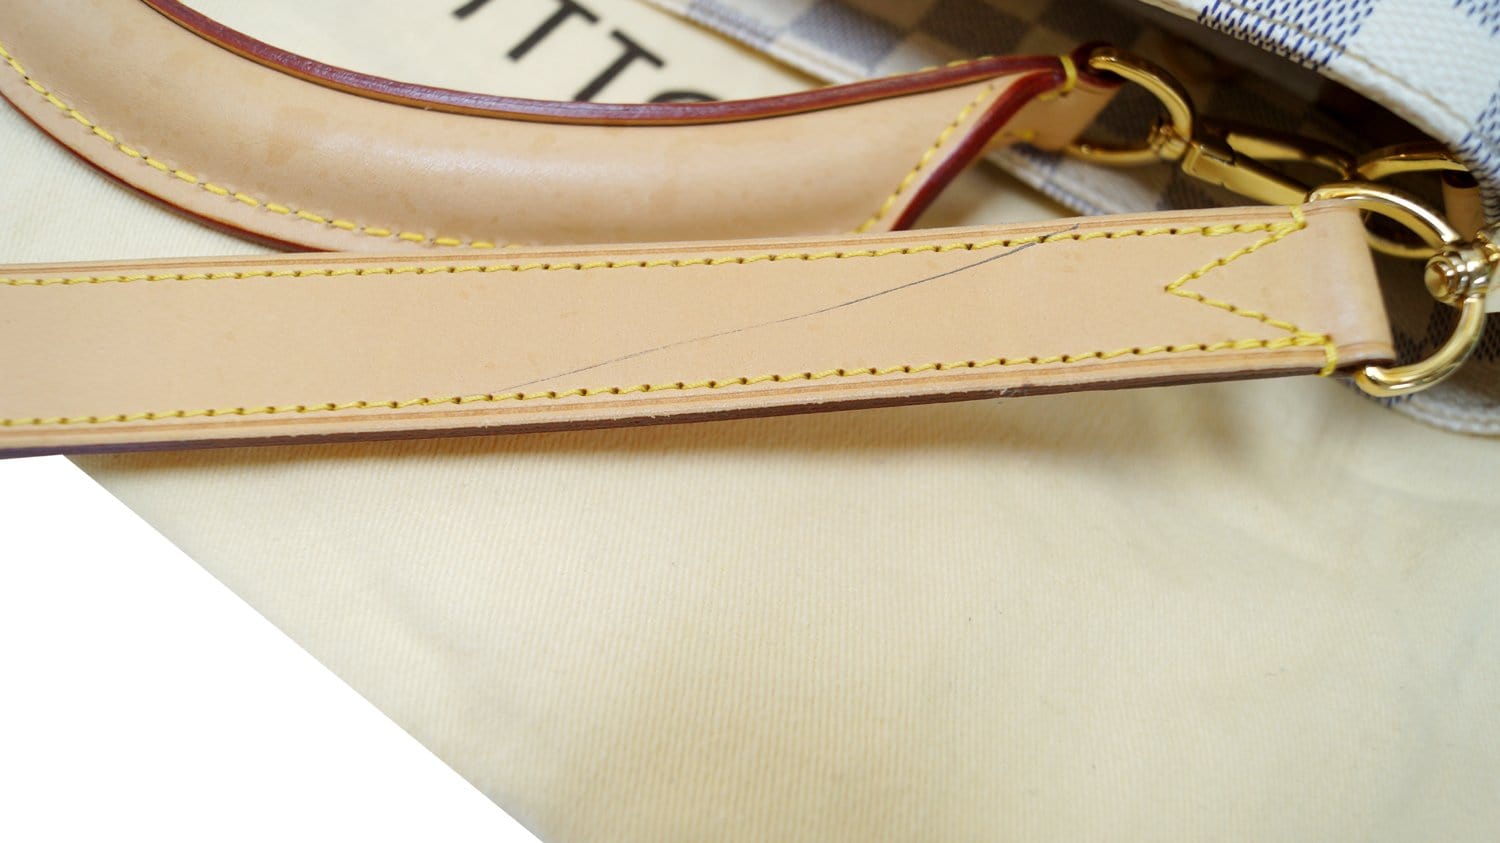 LOUIS VUITTON Damier Azur Soffi White Shoulder Handbag - 20% Off